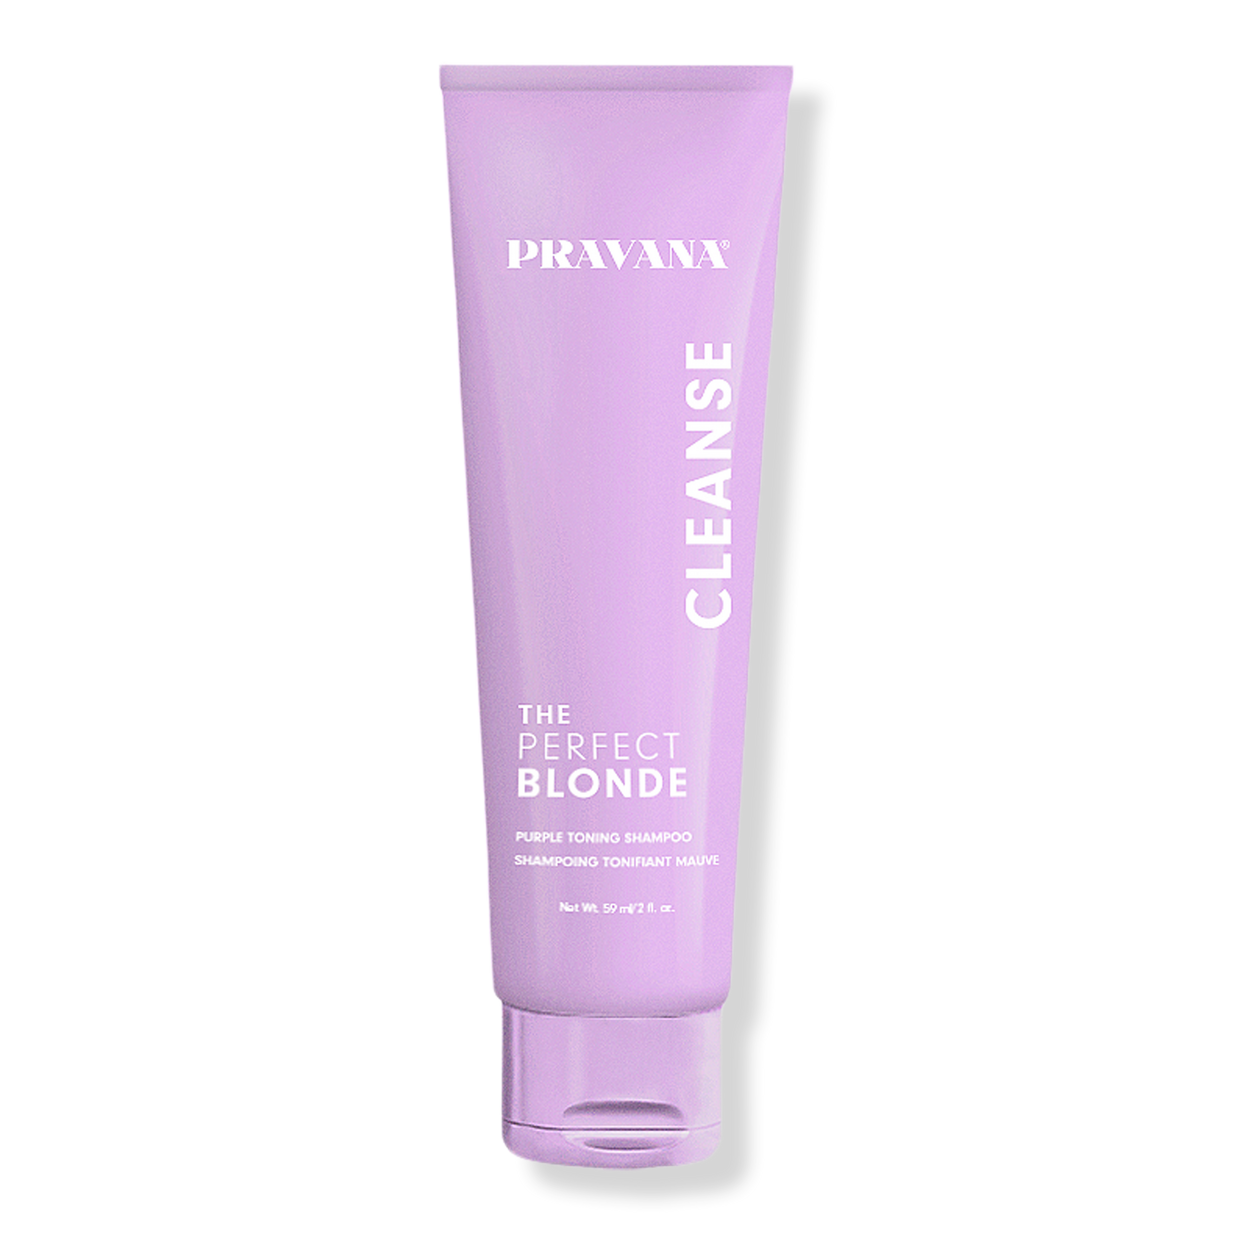 Travel The Perfect Blonde Shampoo Pravana | Ulta Beauty